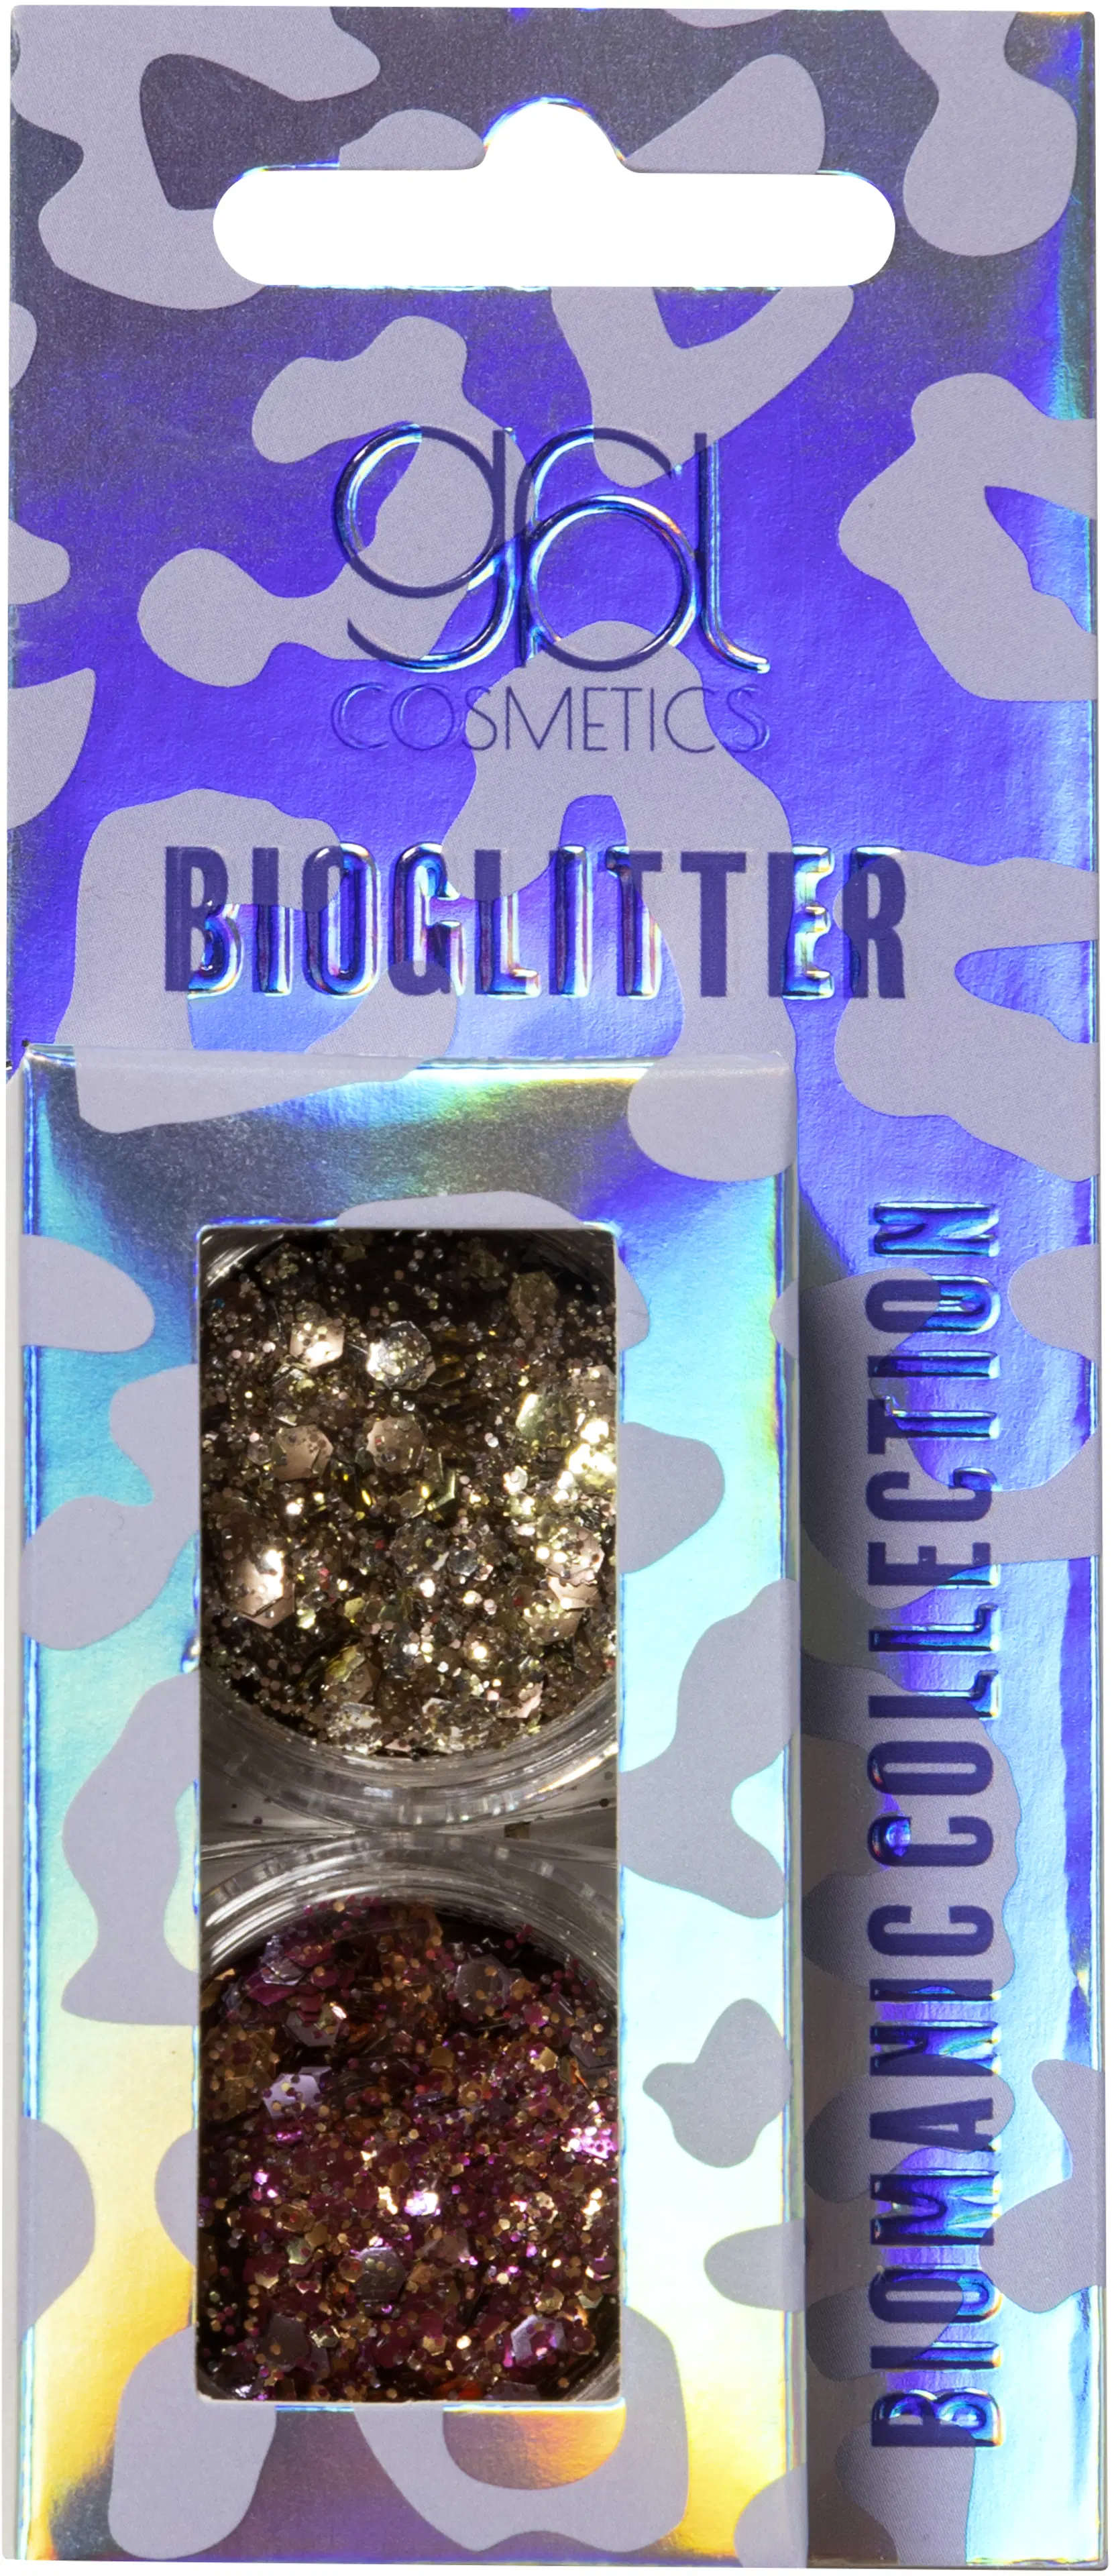 GBL Cosmetics Biomanic bioglitter solace